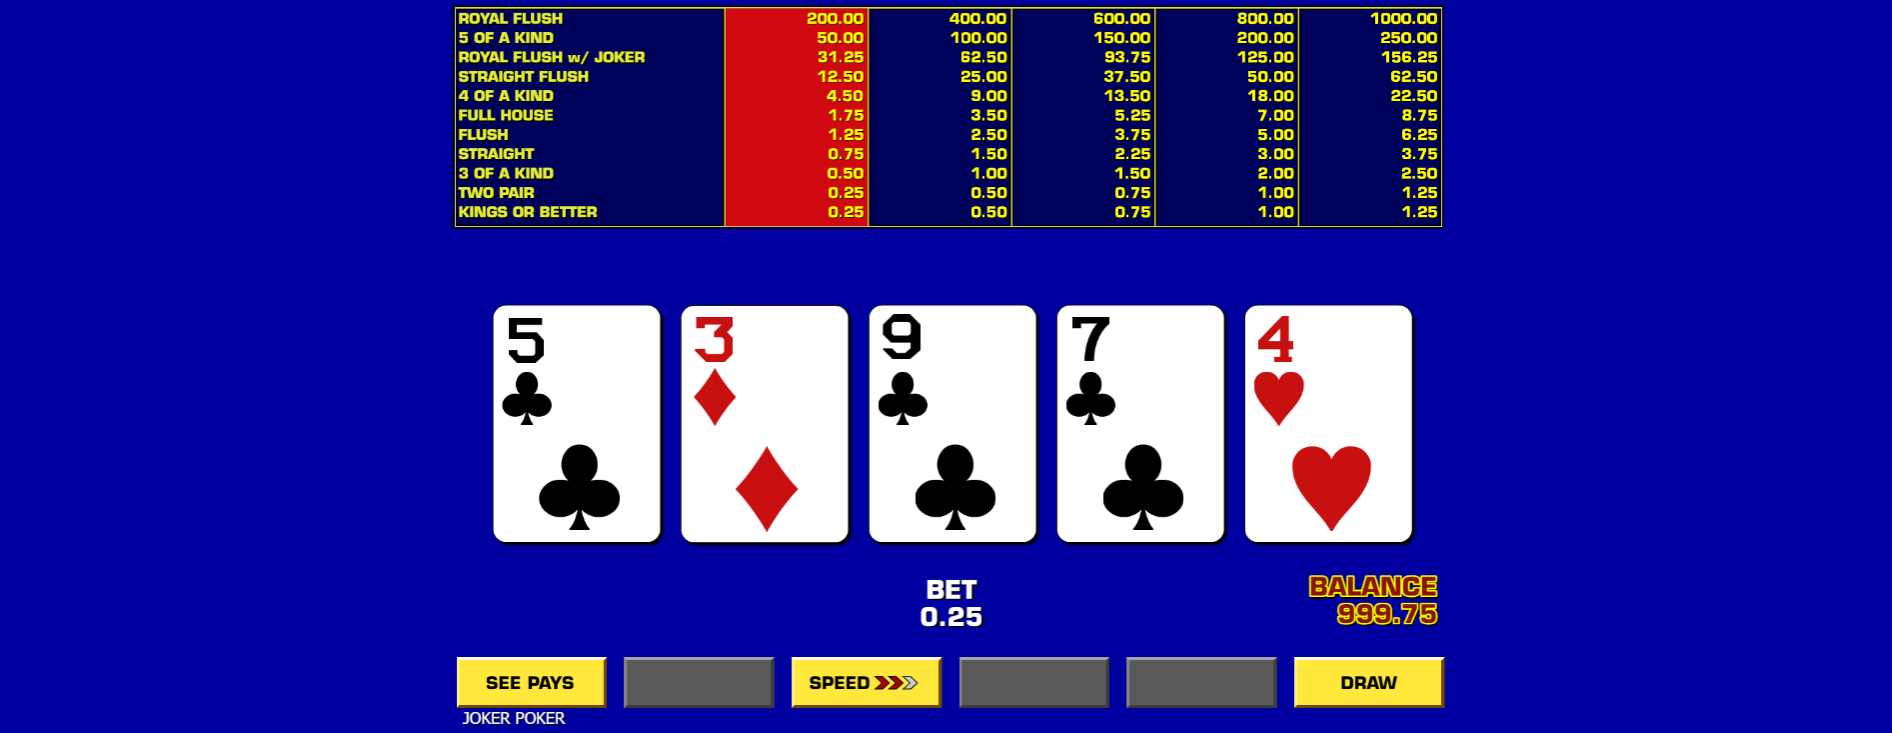 Golden Nugget MI casino video poker